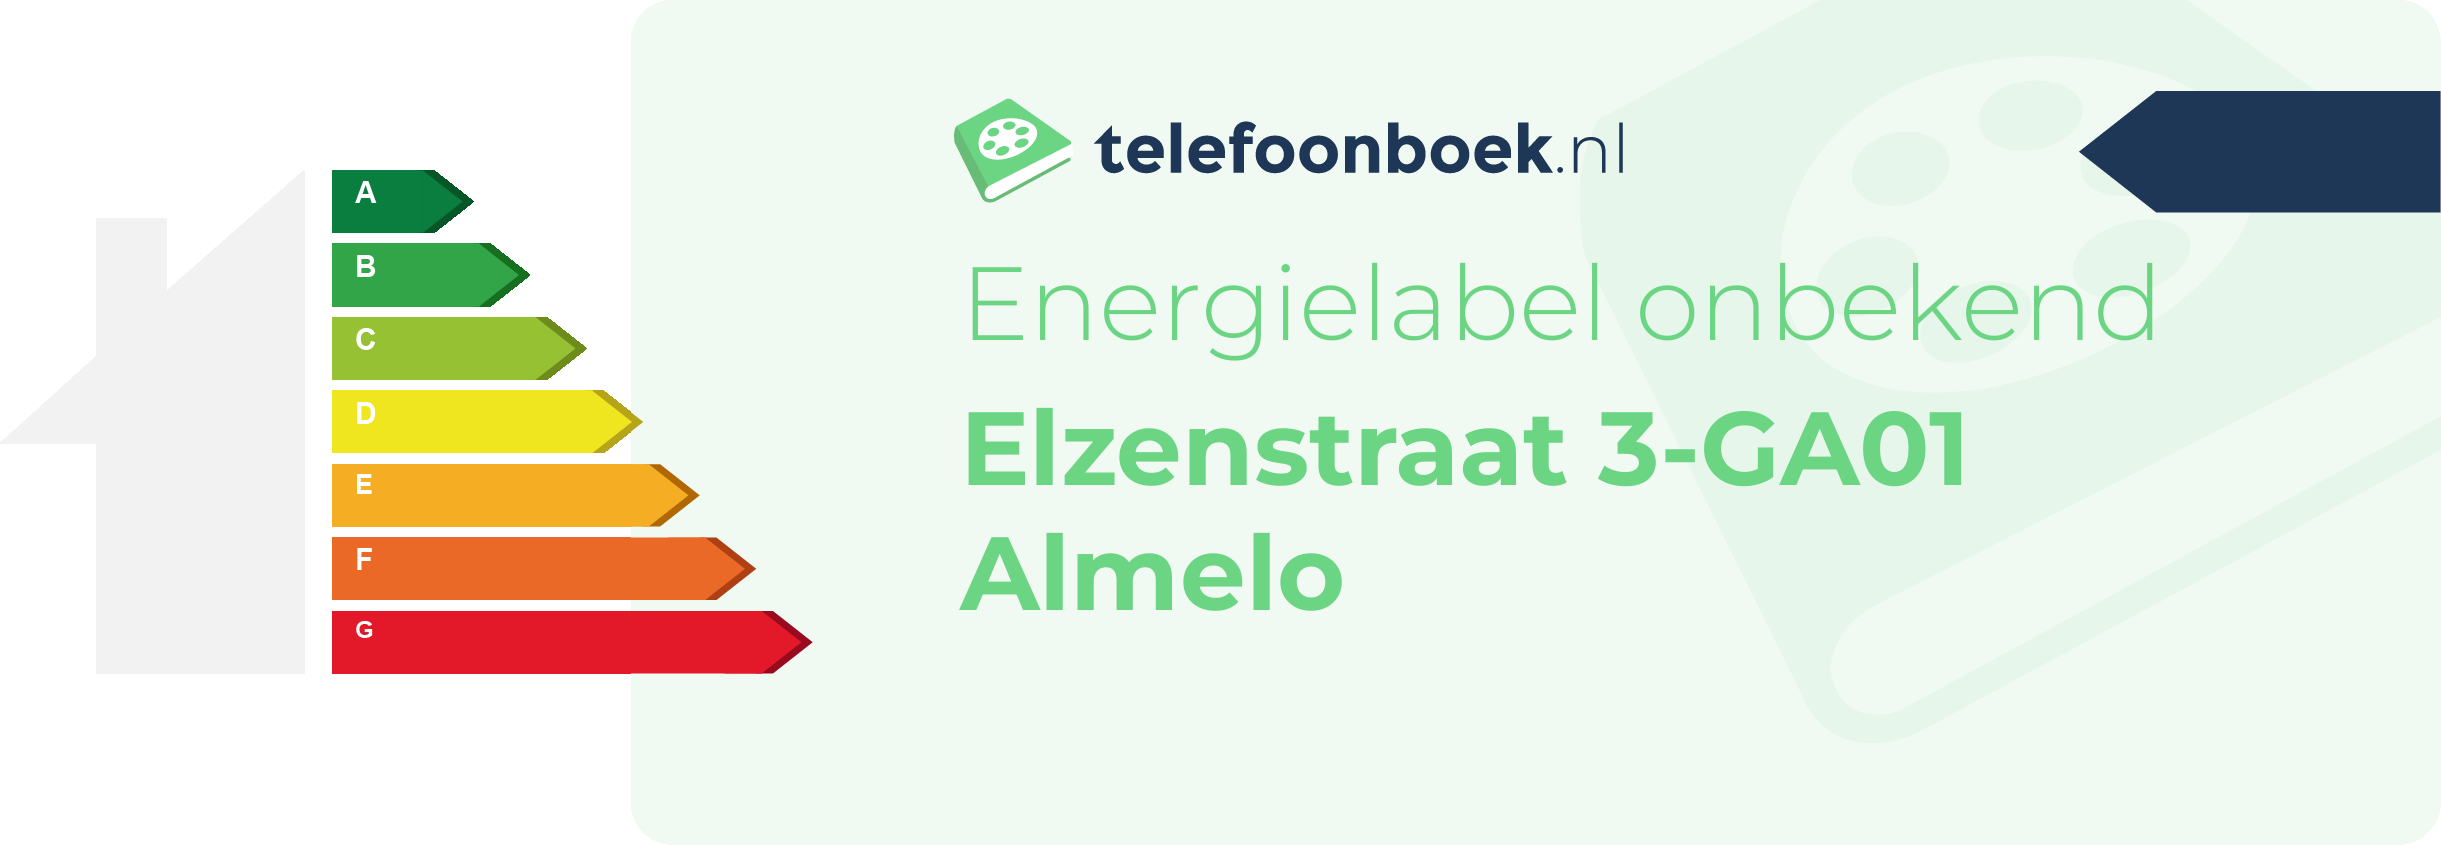 Energielabel Elzenstraat 3-GA01 Almelo